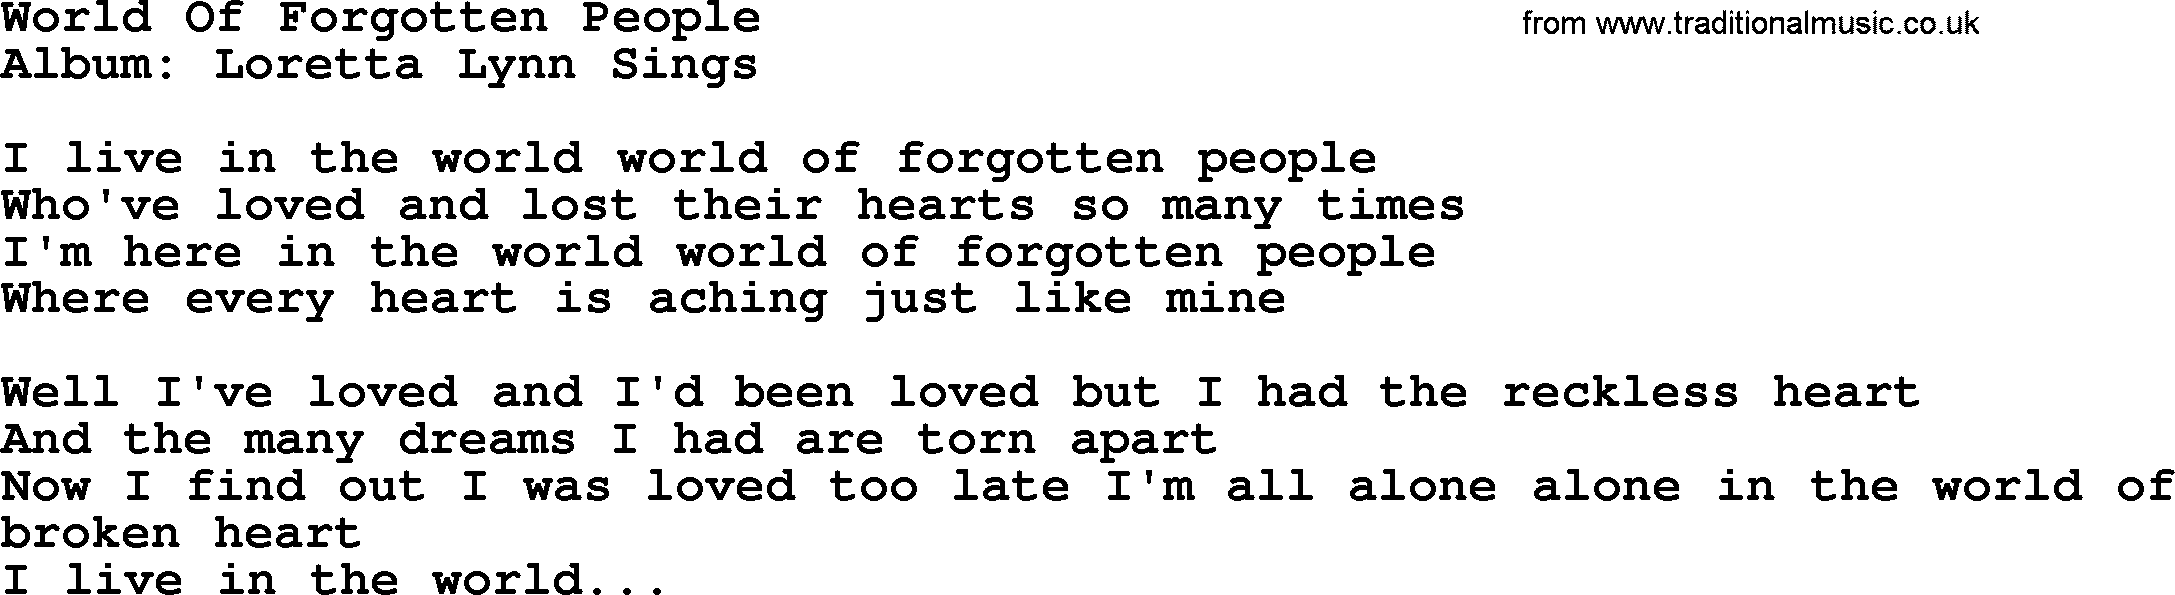 Loretta Lynn song: World Of Forgotten People lyrics